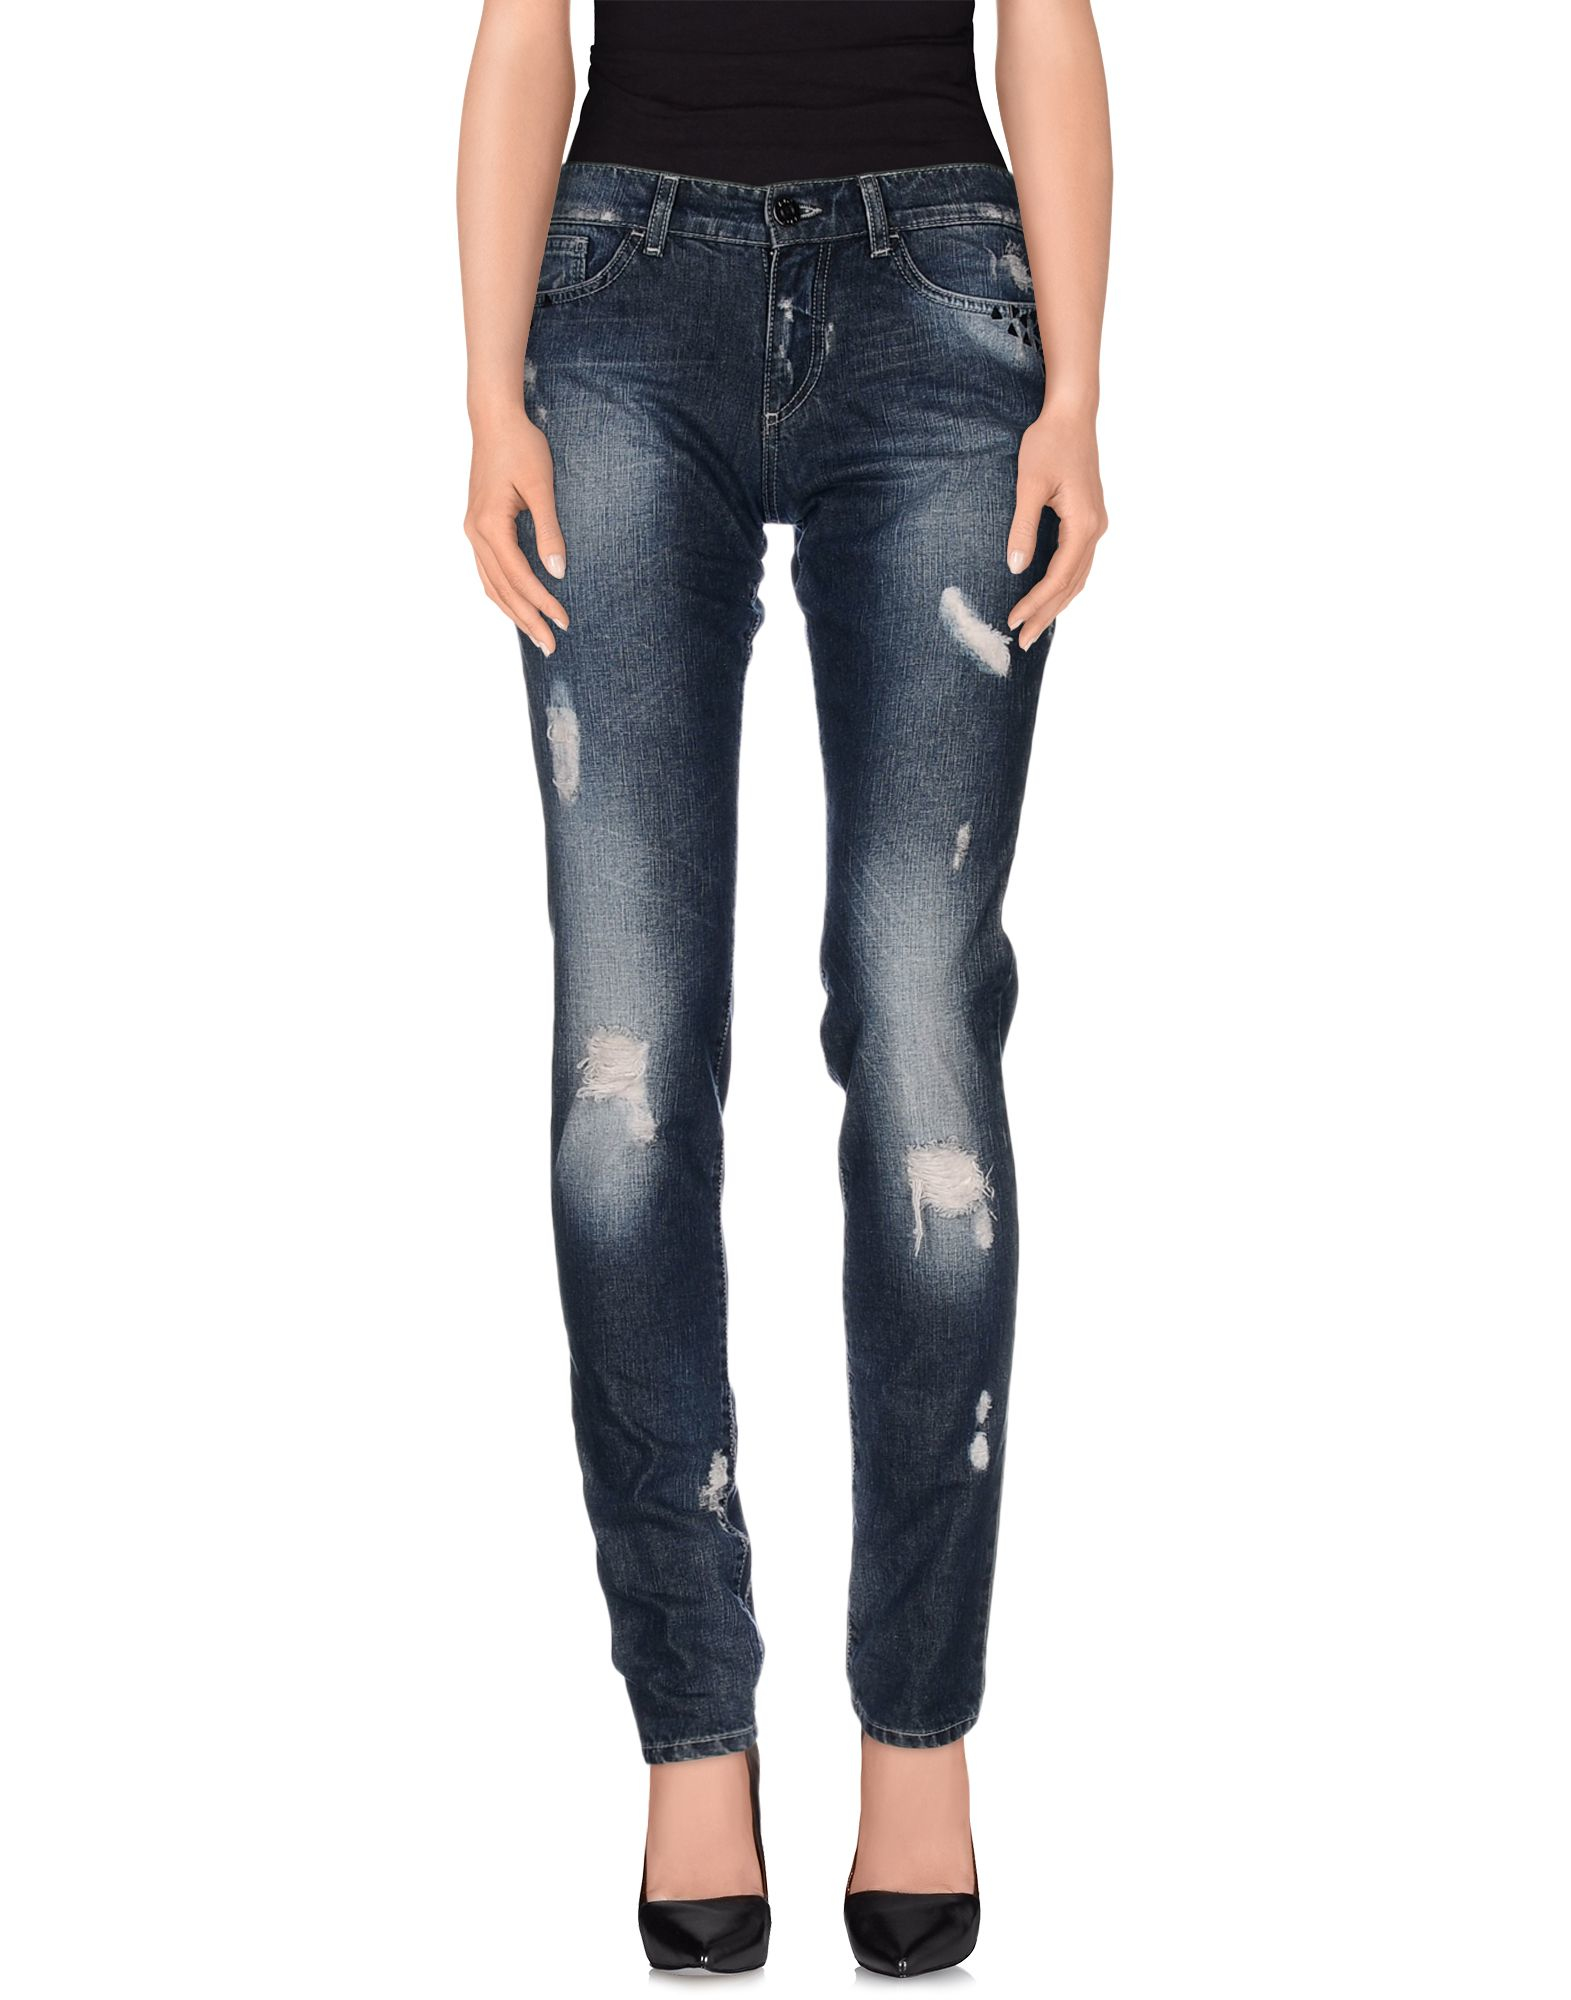 Lyst - Versace Jeans Denim Trousers in Blue